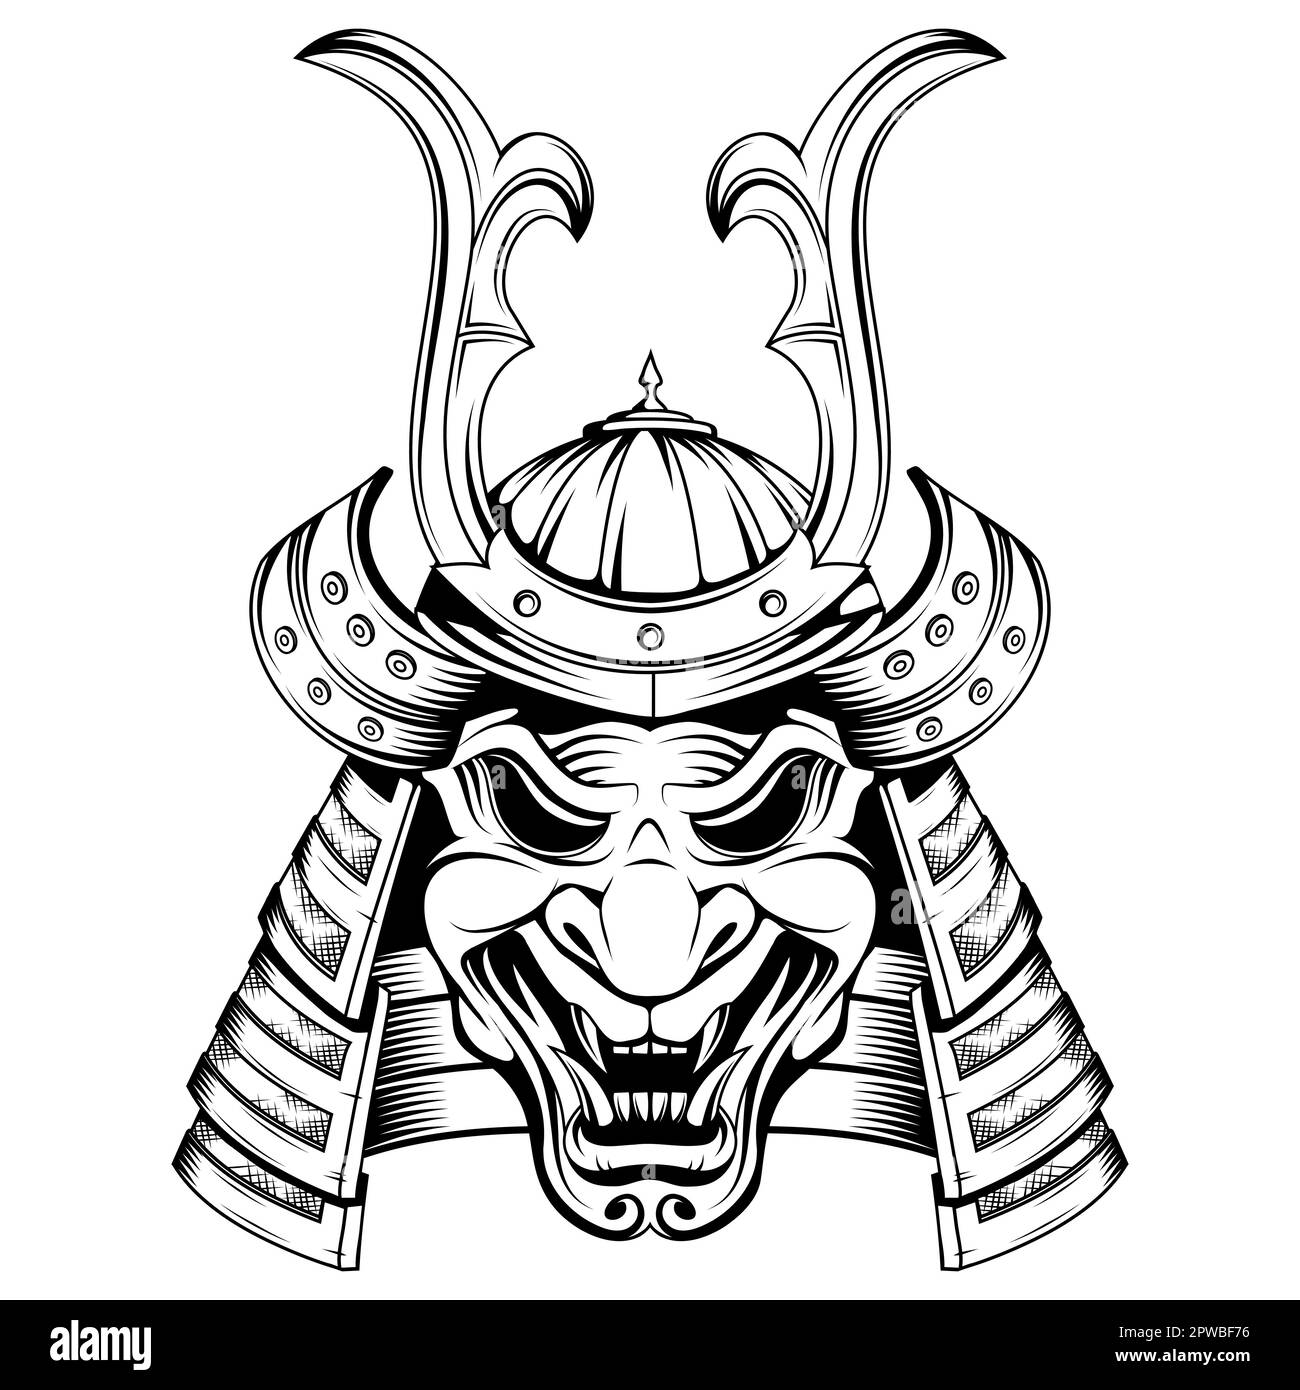 Samurai helmet. Vector illustration of a sketch japanese samurai mask. Stock Vector